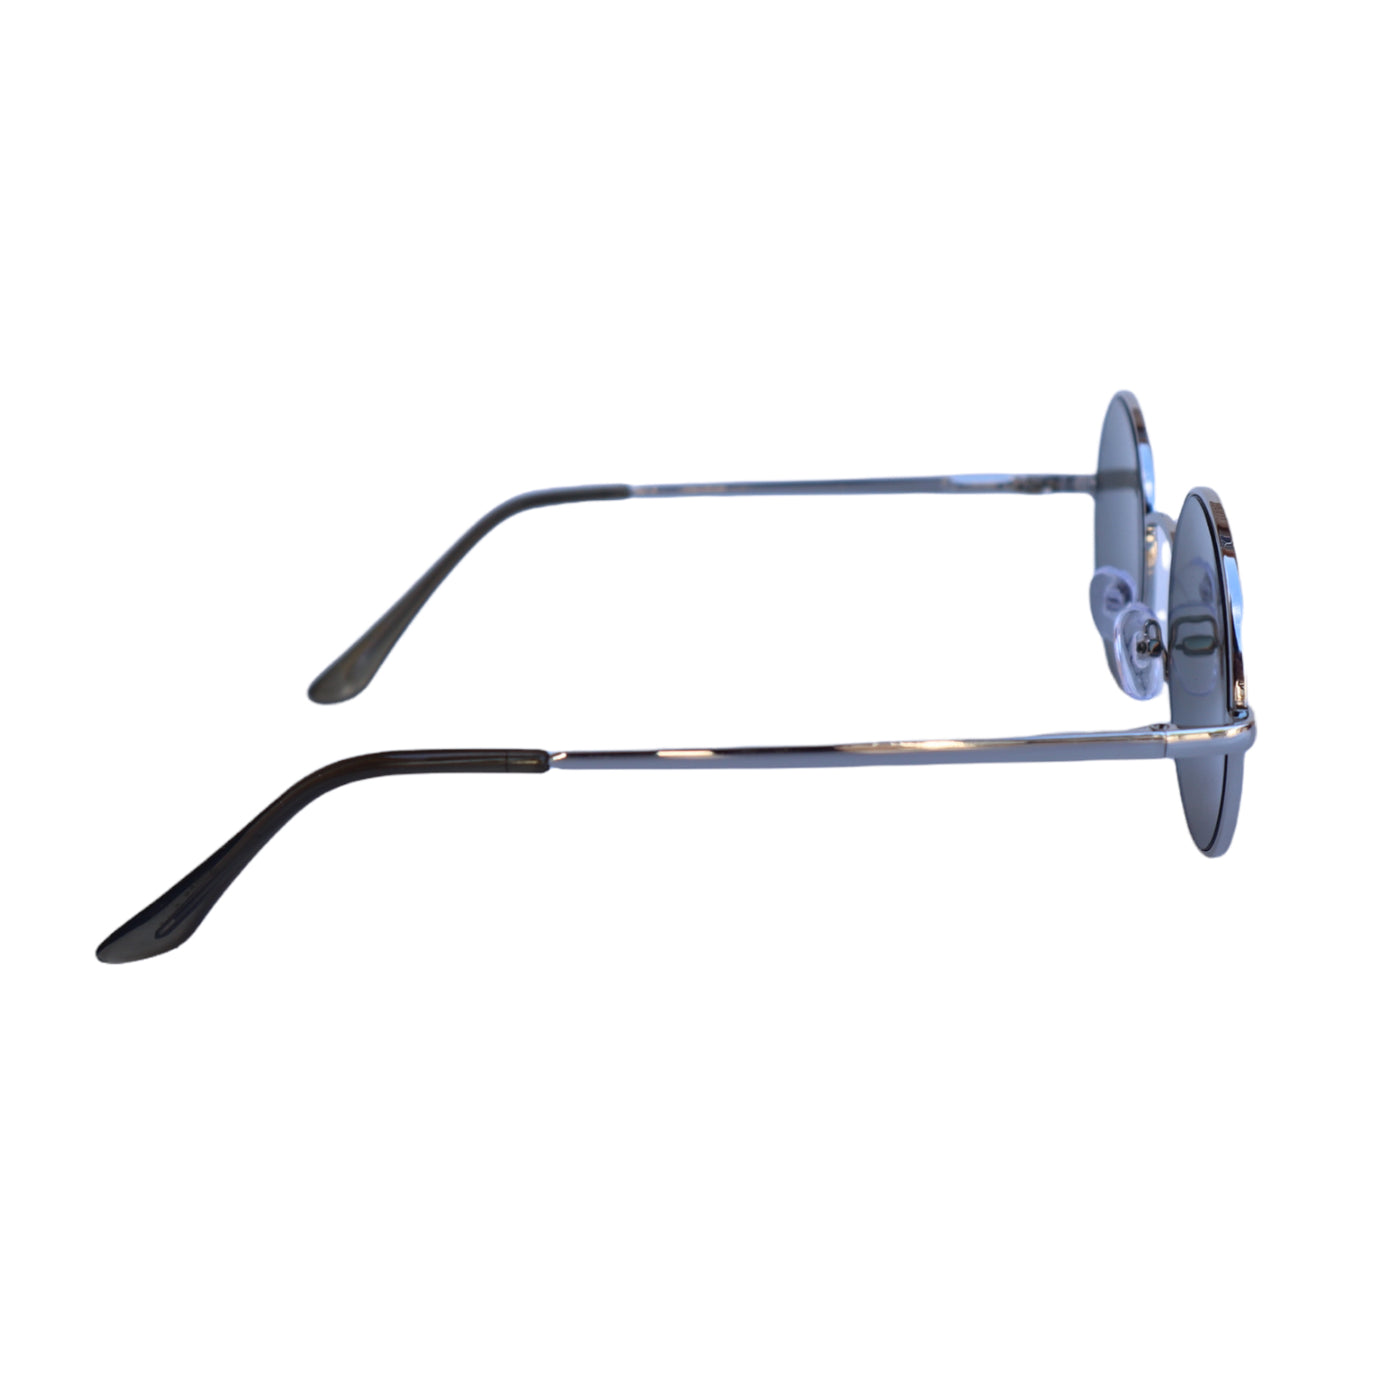 EyeDentification Circular All Metal Frame Sunglasses w/ Reflective BLACK Lens